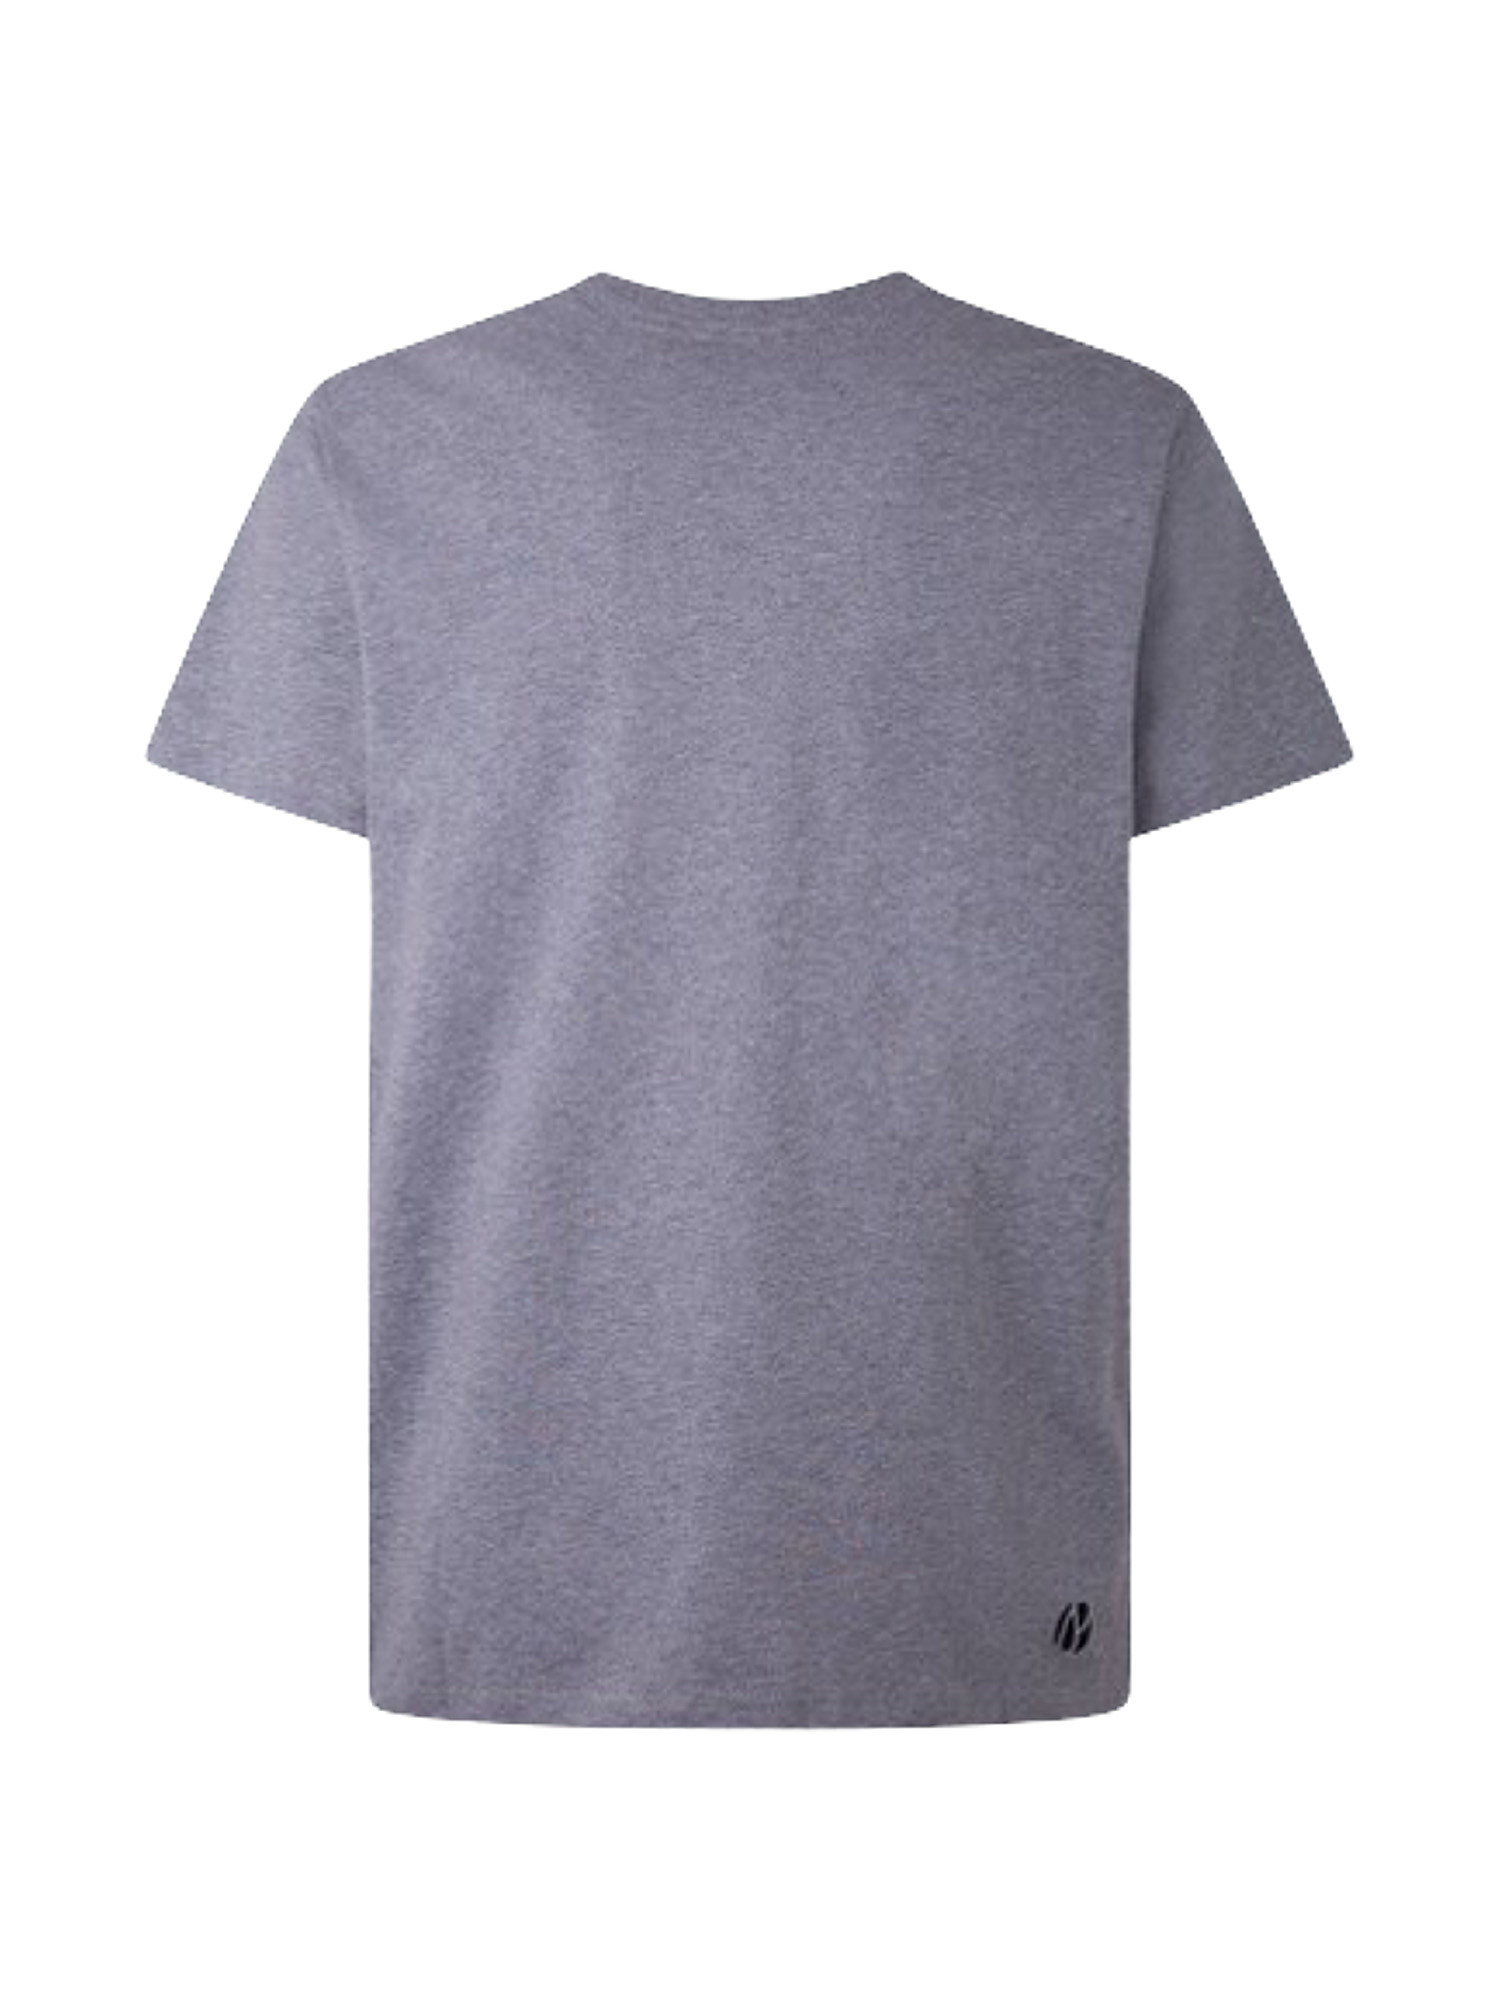 Ainsley photo print t-shirt, Grey, large image number 1